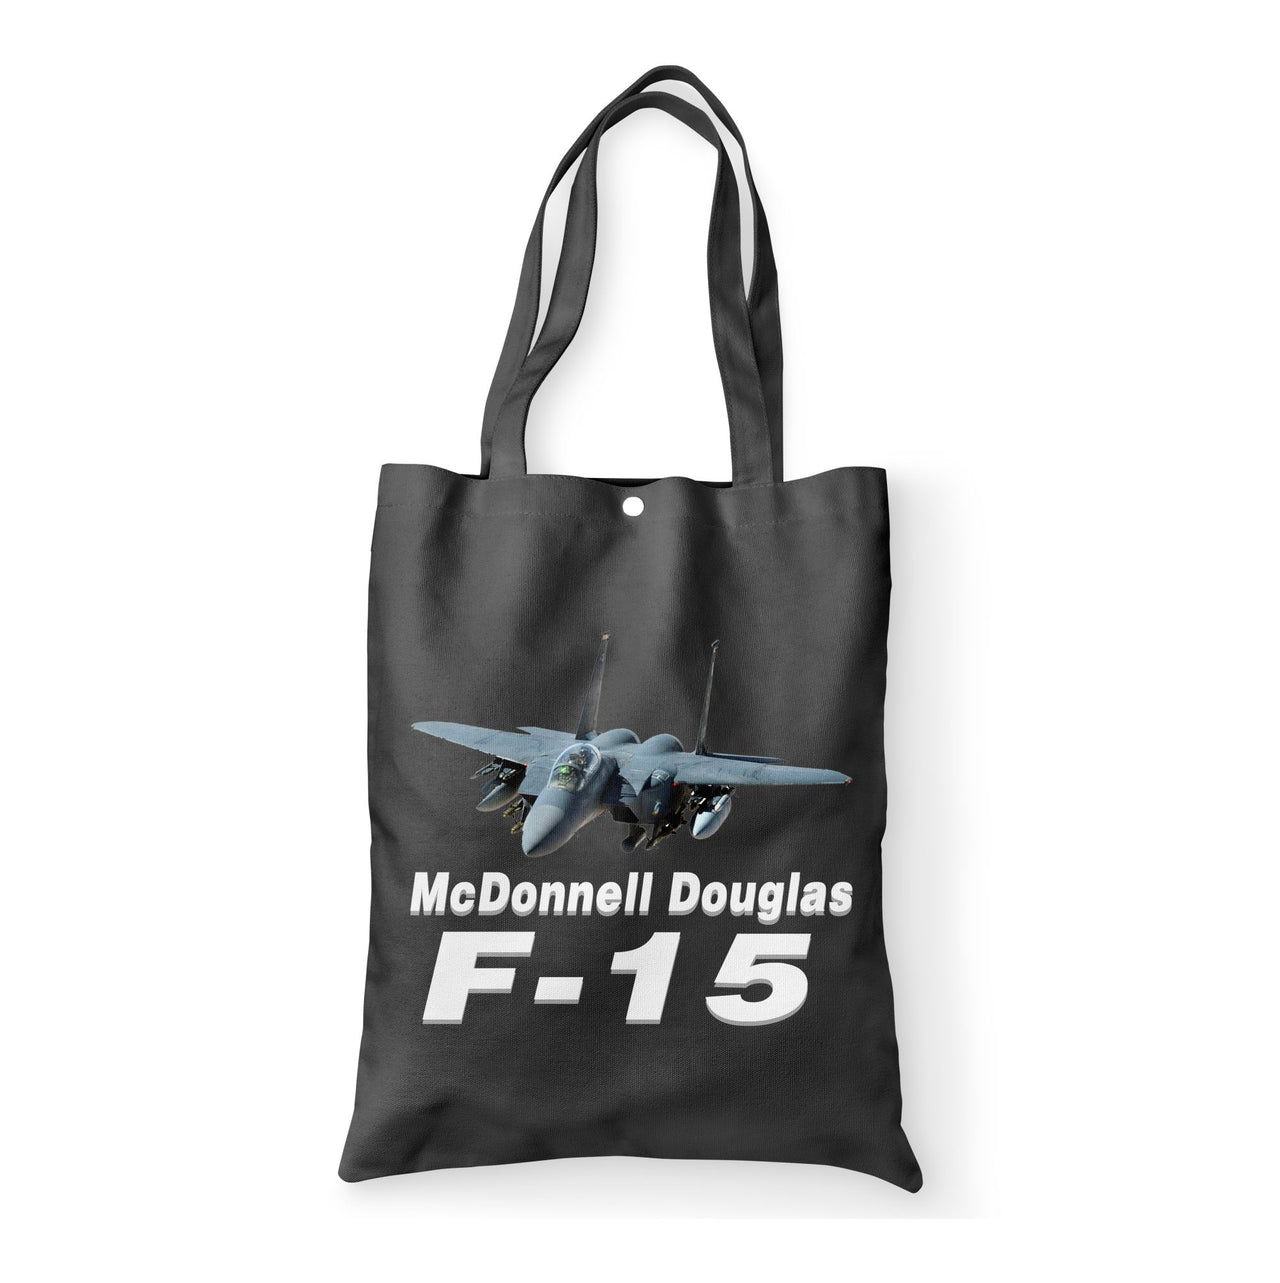 The McDonnell Douglas F15 Designed Tote Bags